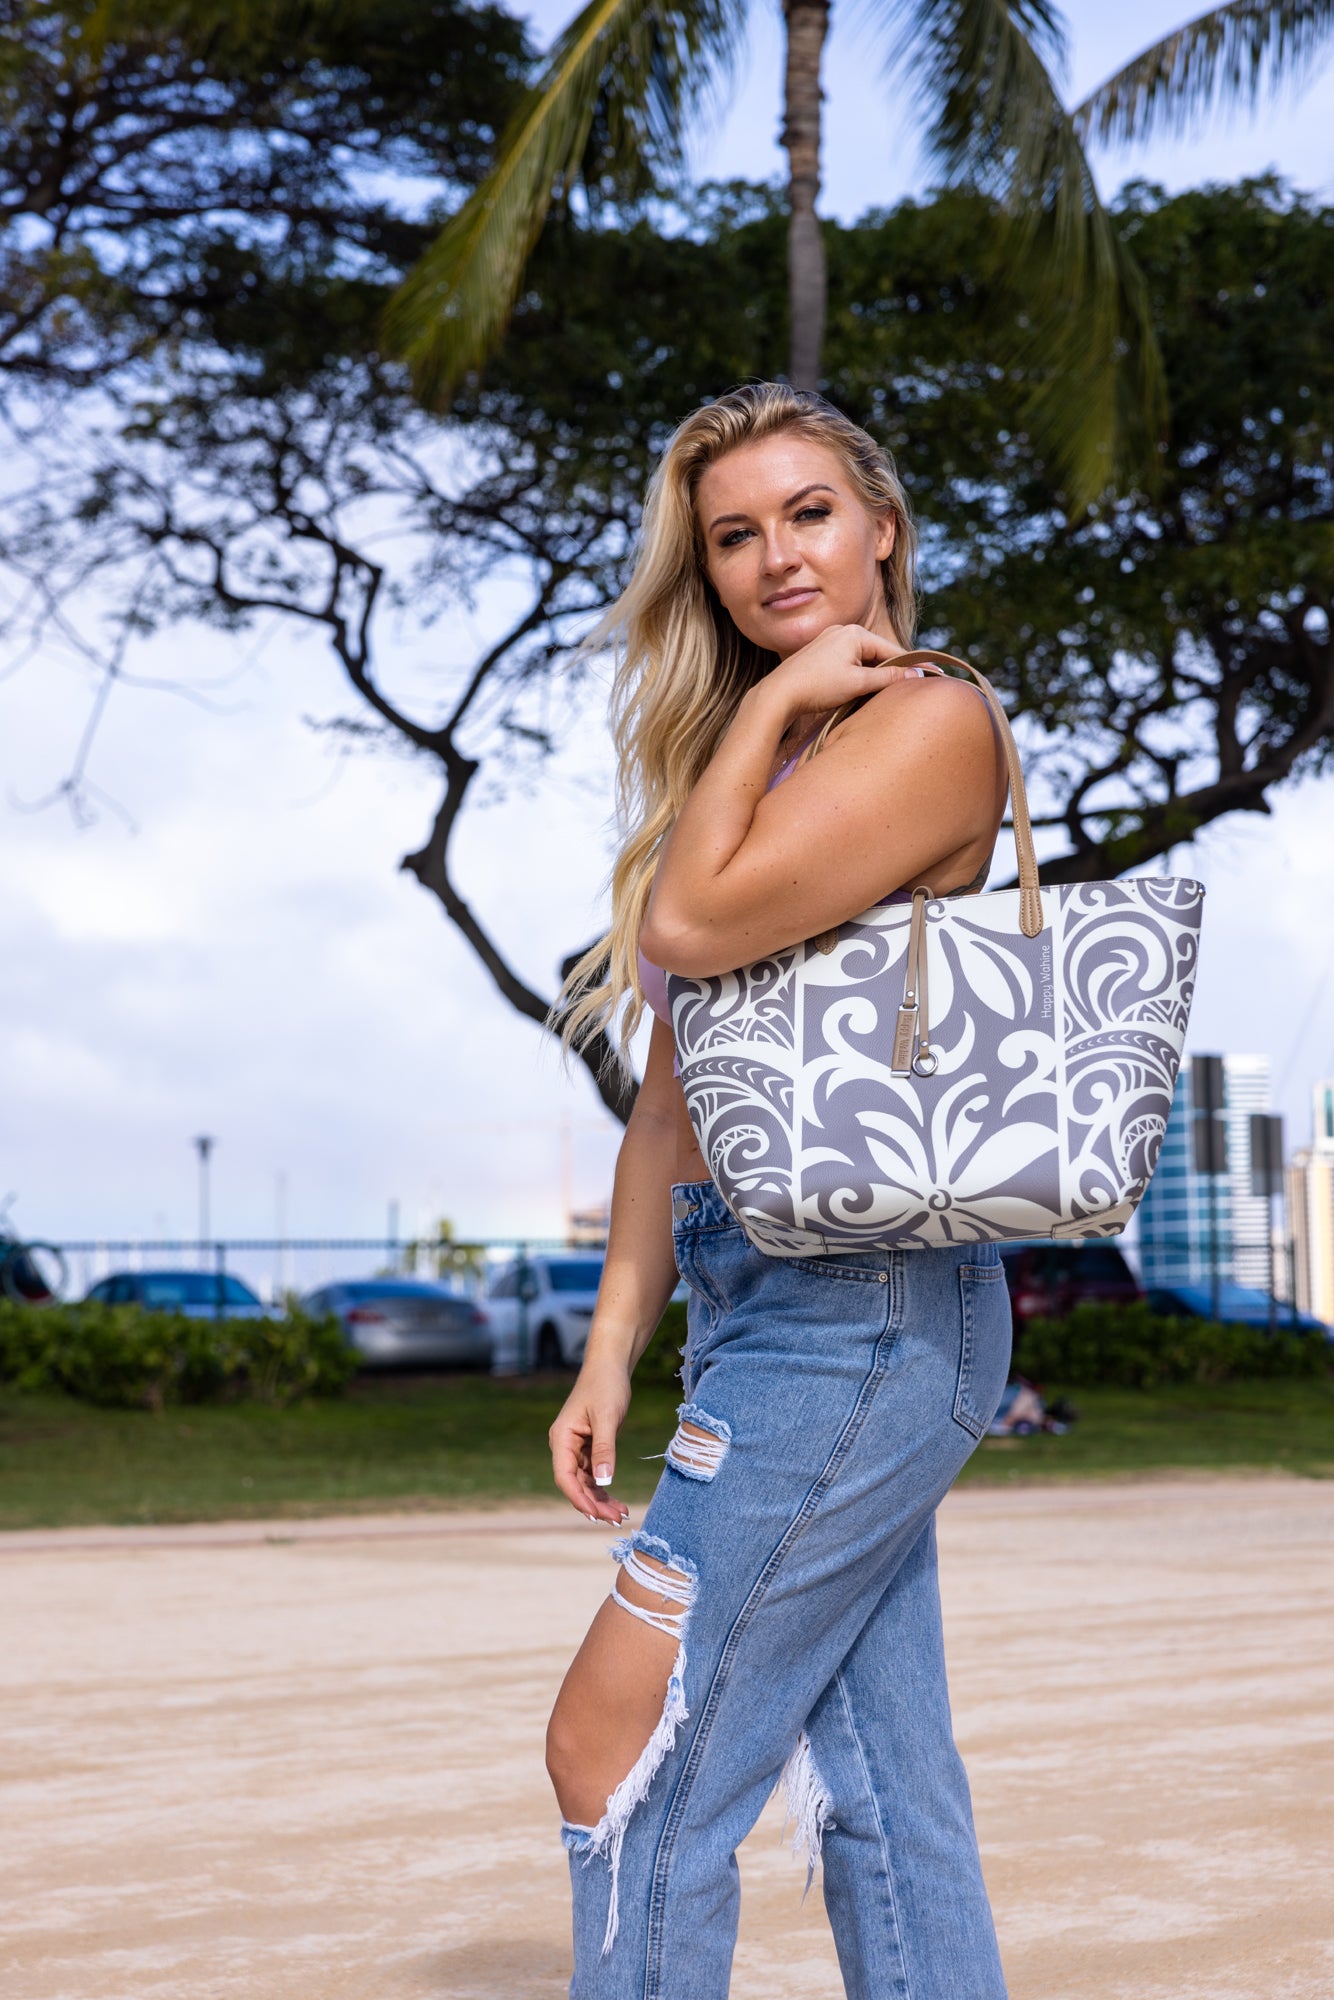 Buy David Jones Tote Bags at Best Prices Online in Sri Lanka